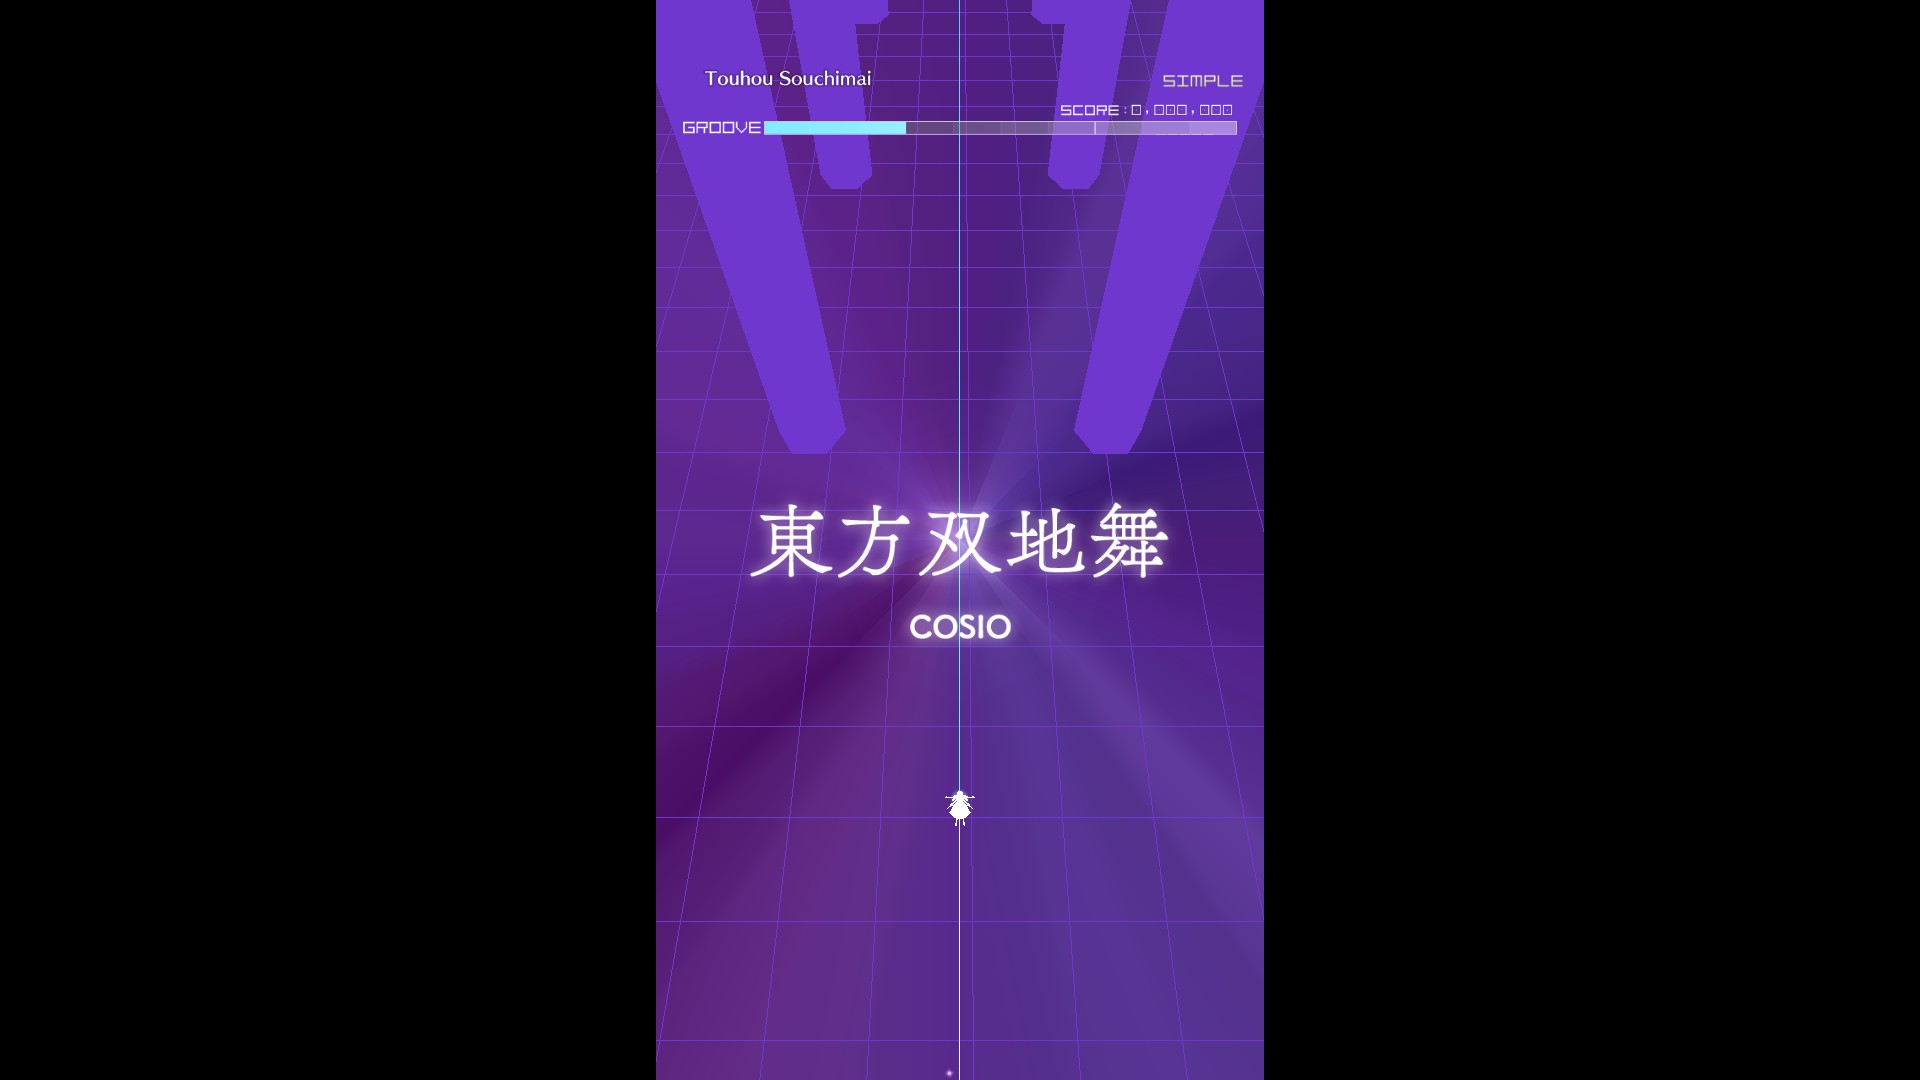 Groove Coaster - Touhou Souchimai Featured Screenshot #1